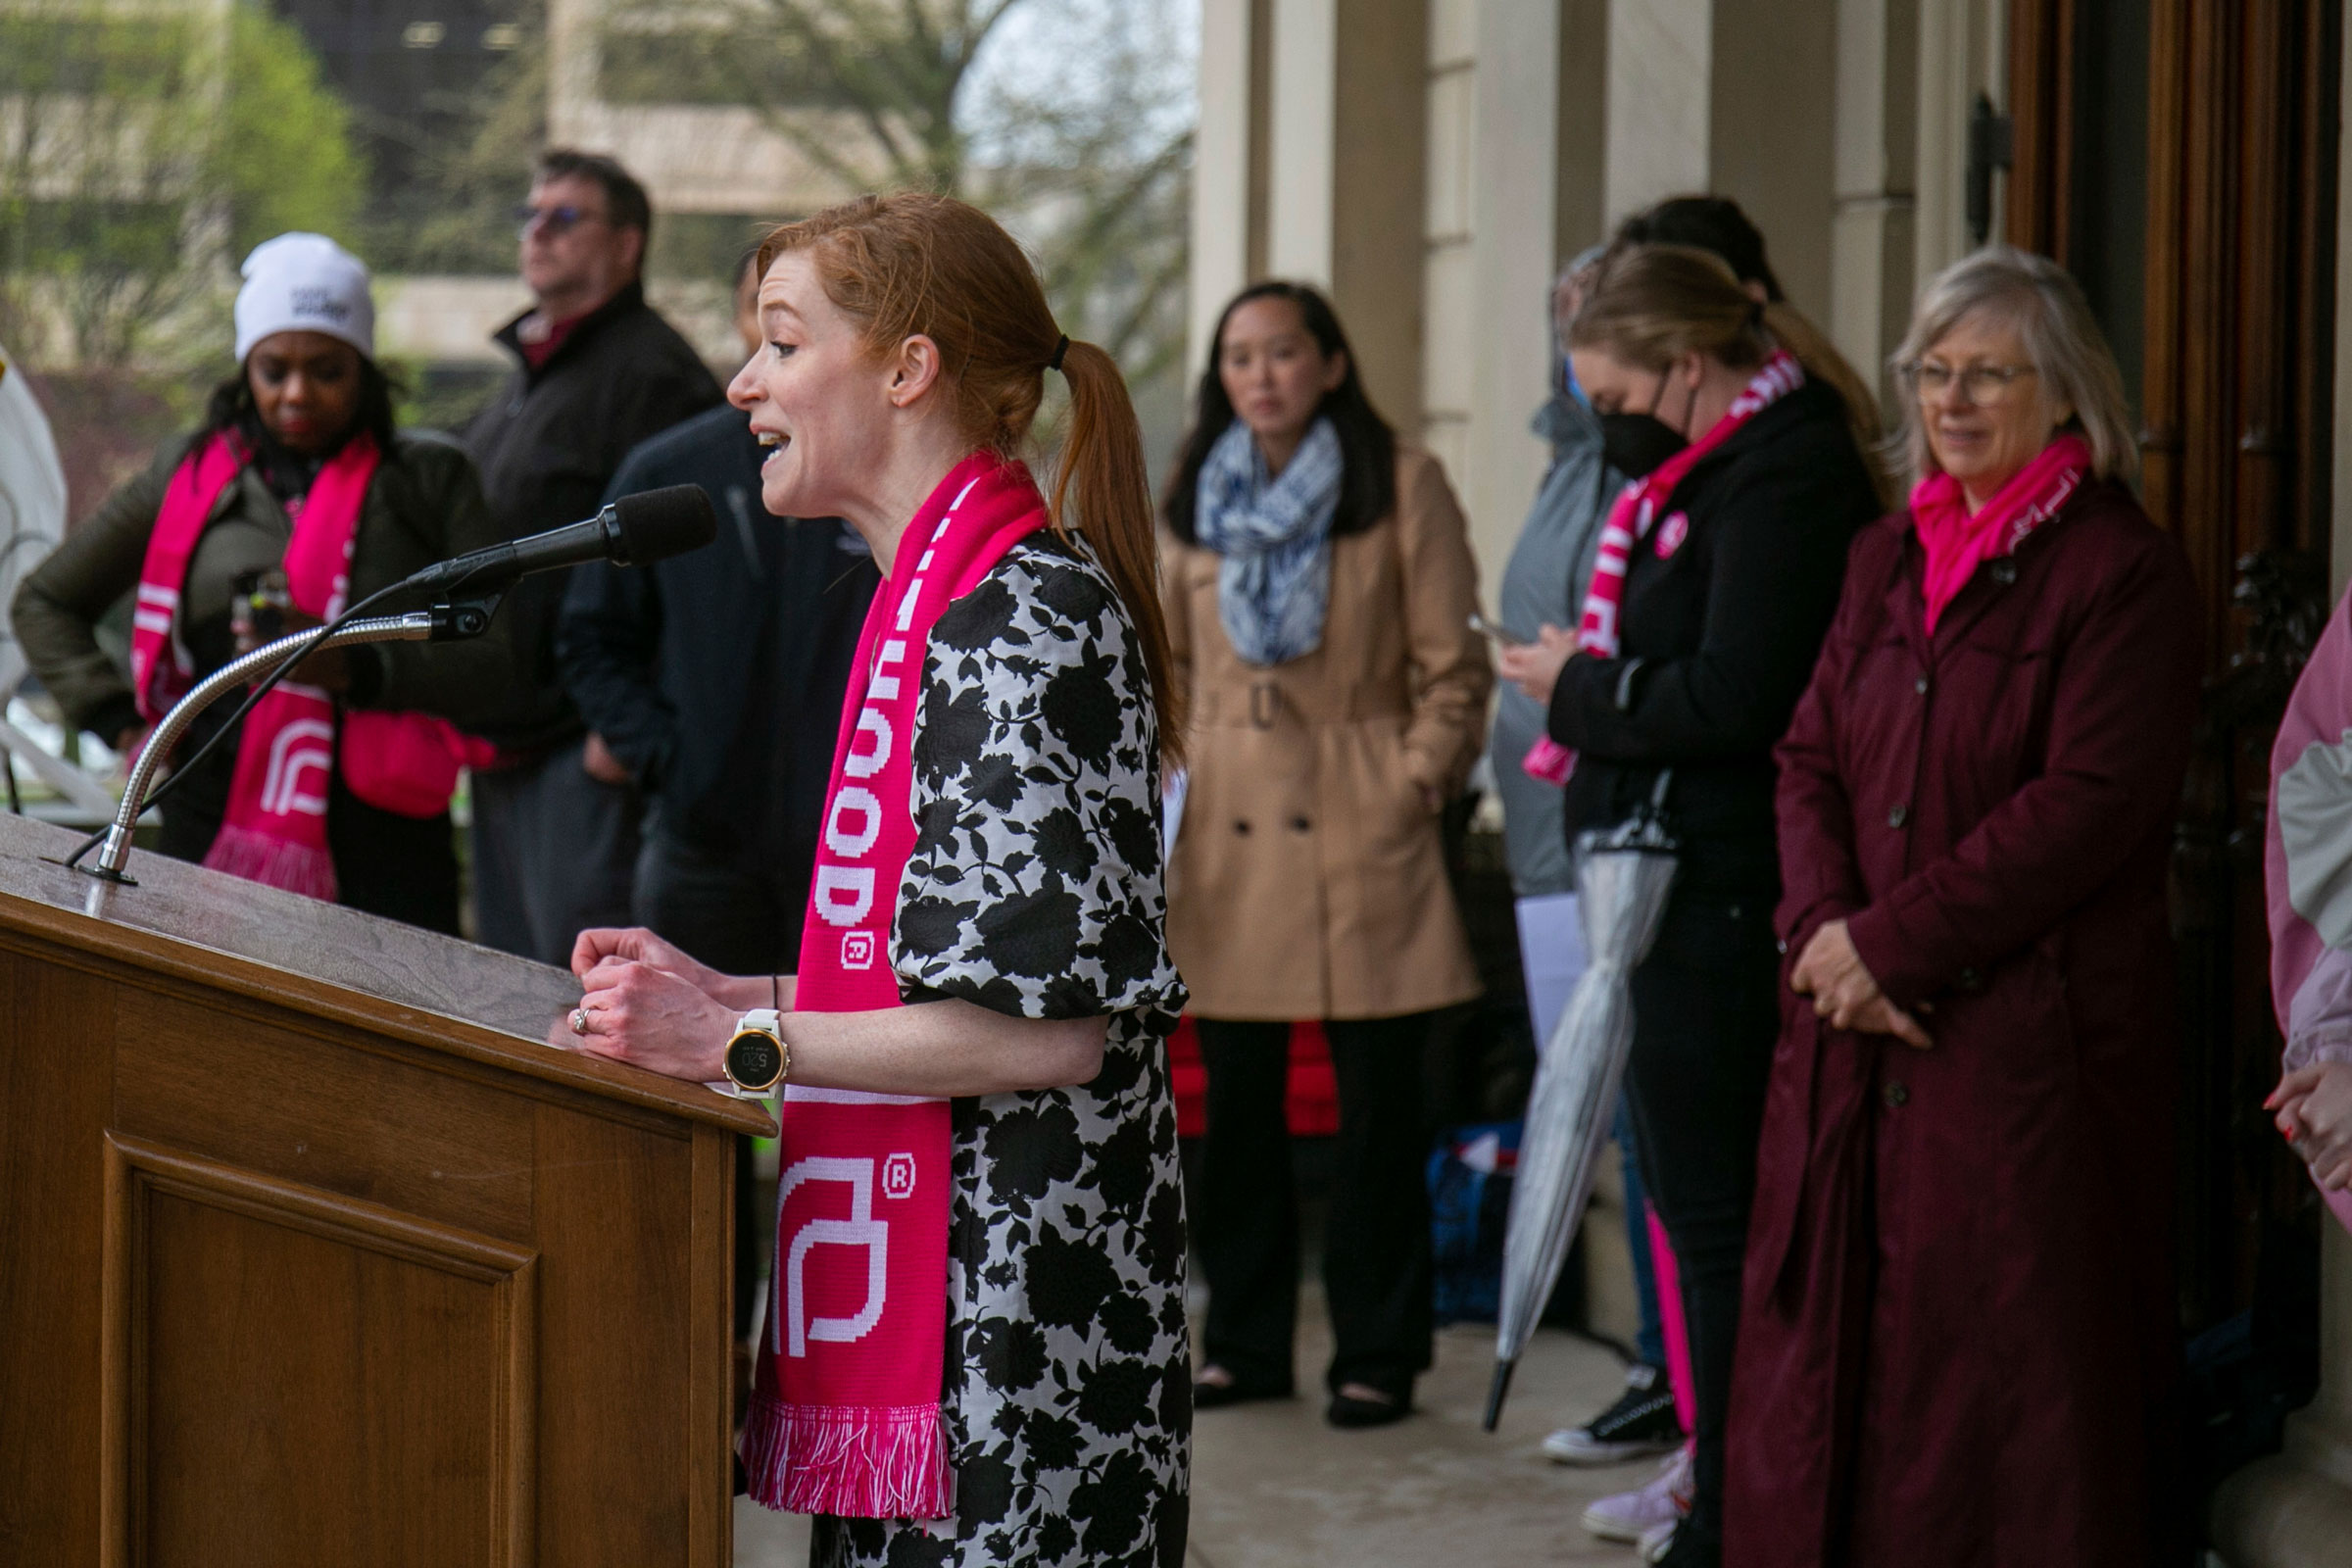 Michigan State Senator Mallory McMorrow speaks at a rally organized by Planned Parenthood Michigan